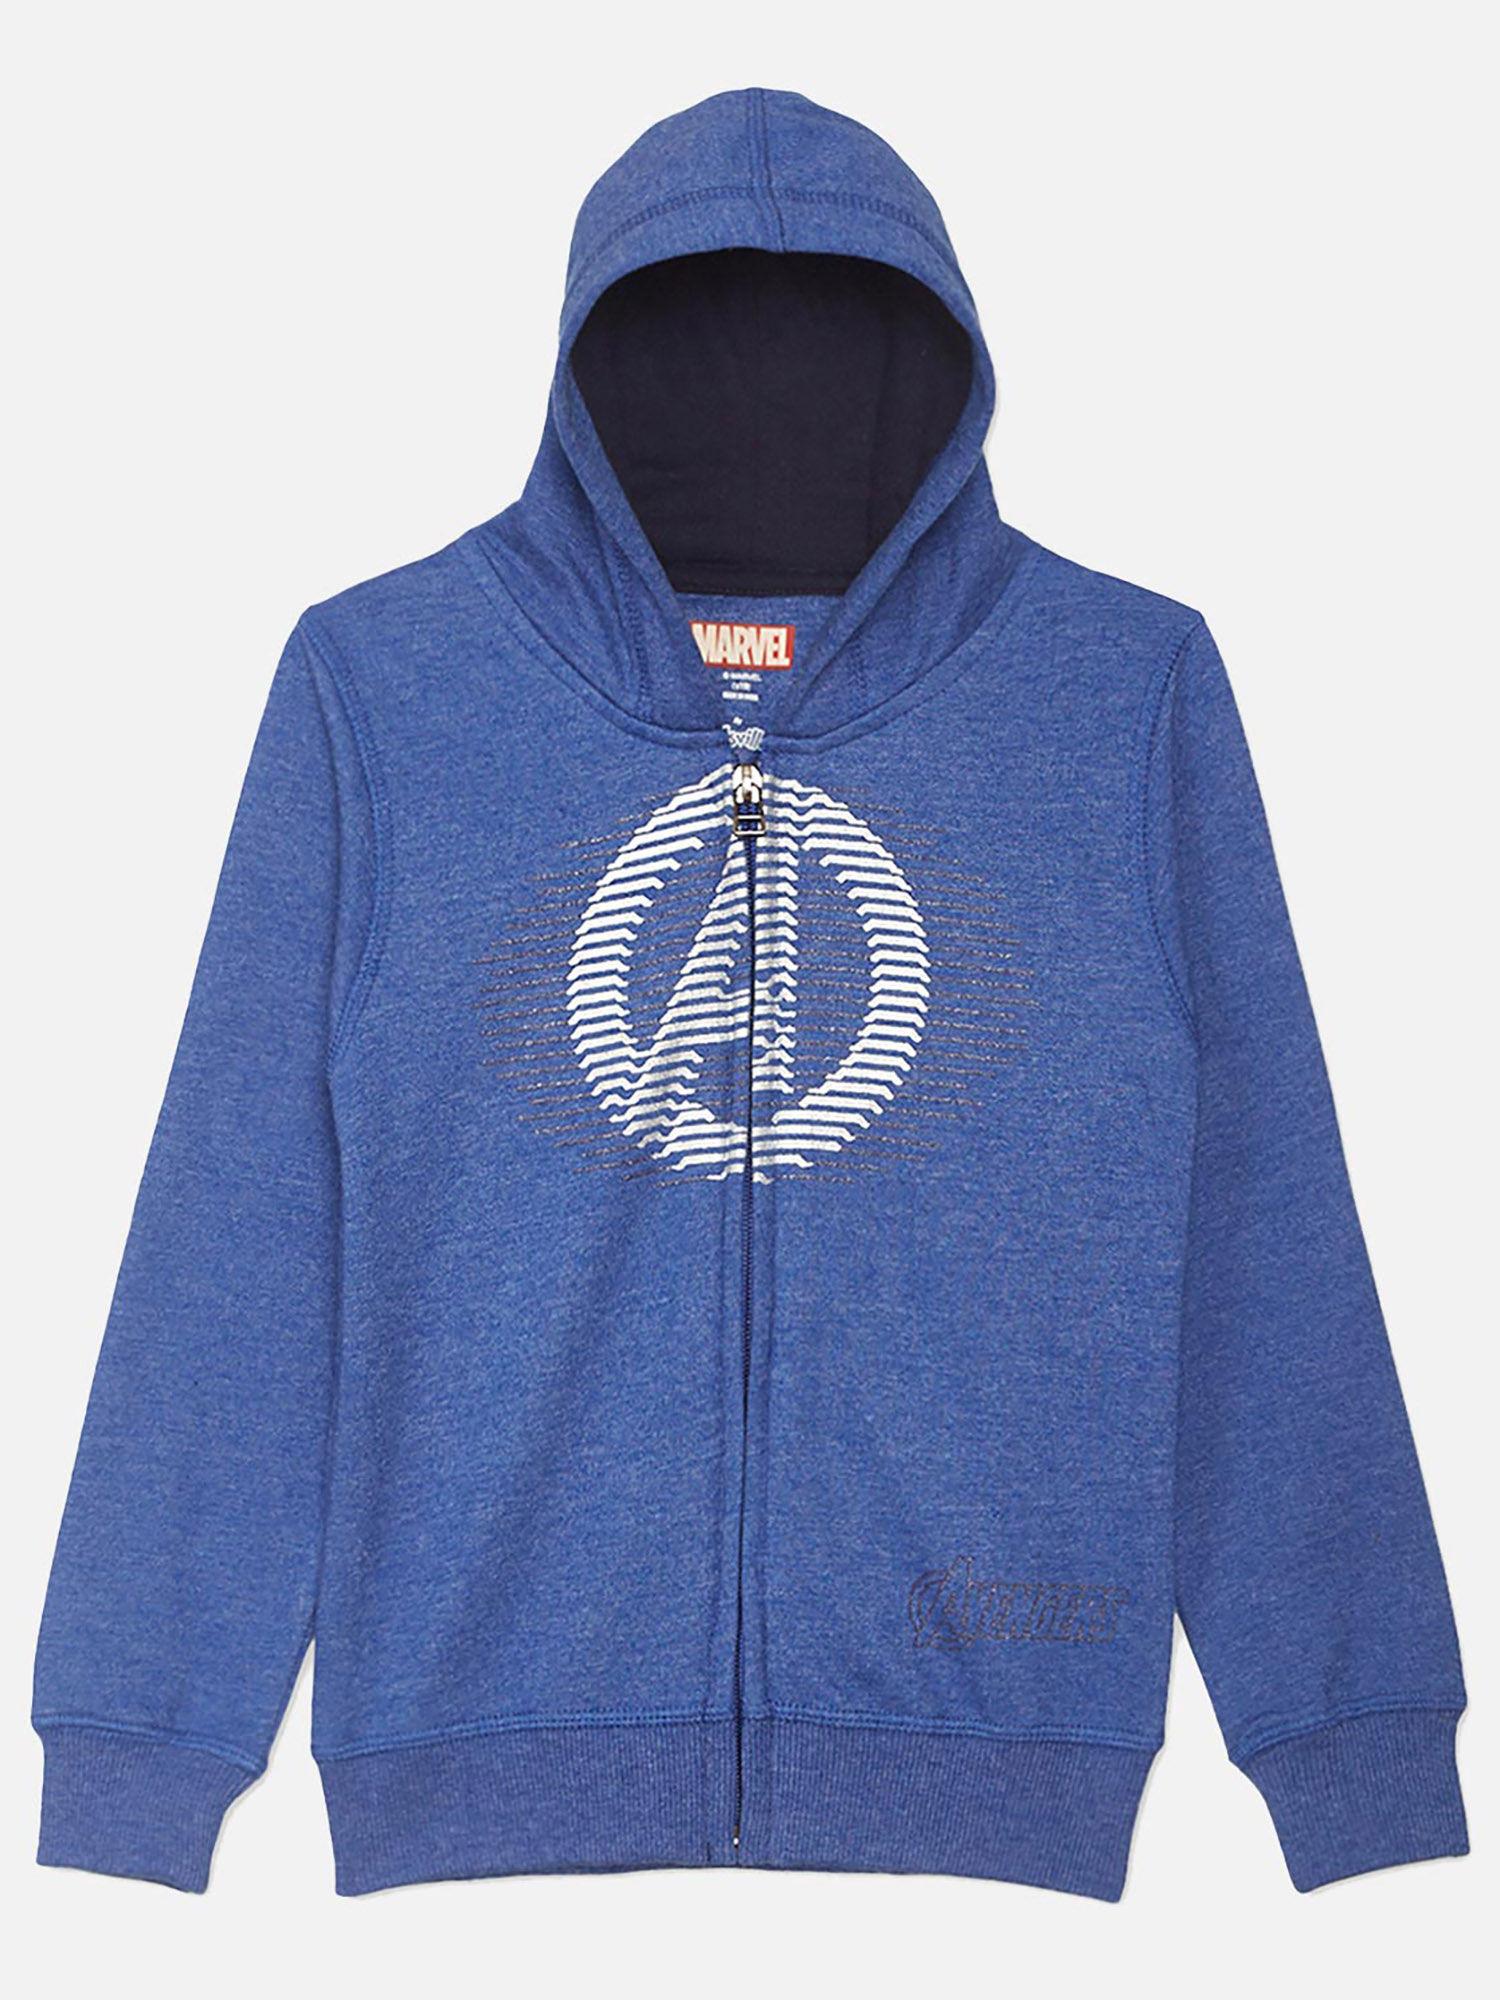 avengers featured blue zipper hoodie for boys